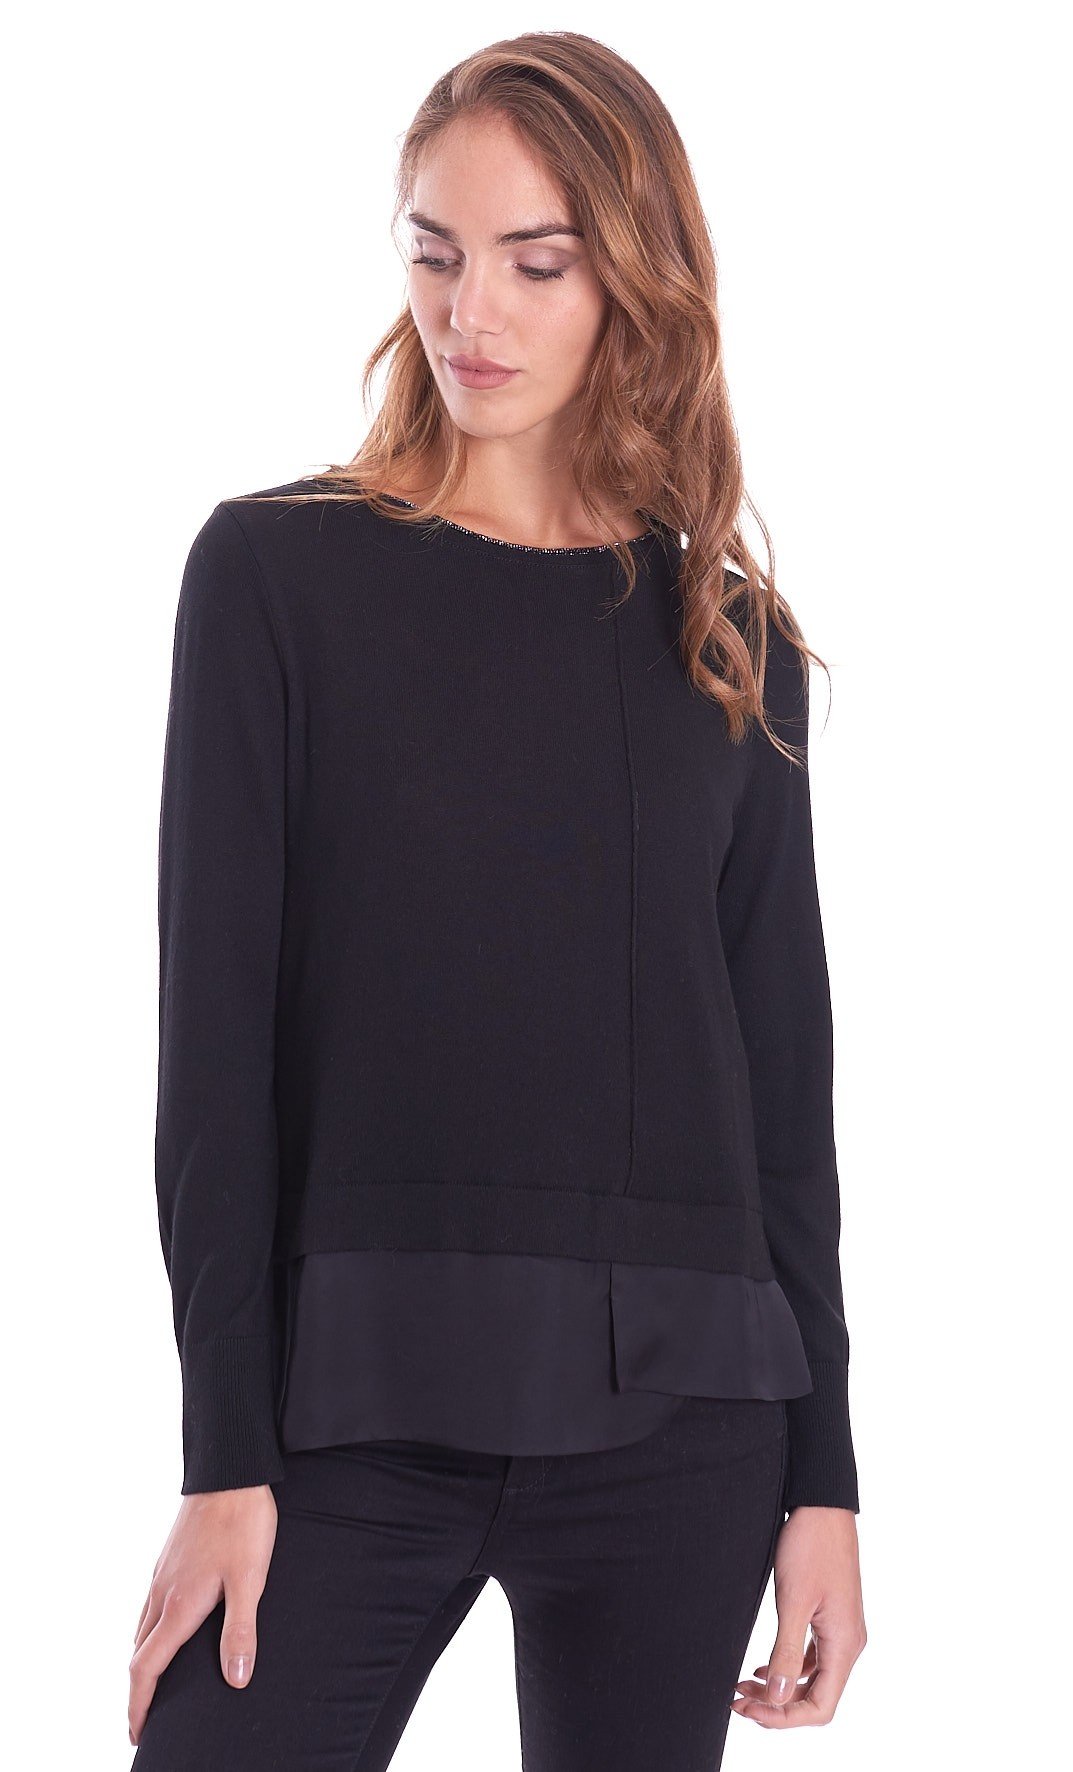 Women's Maria Bellentani round neck sweater with shirt black